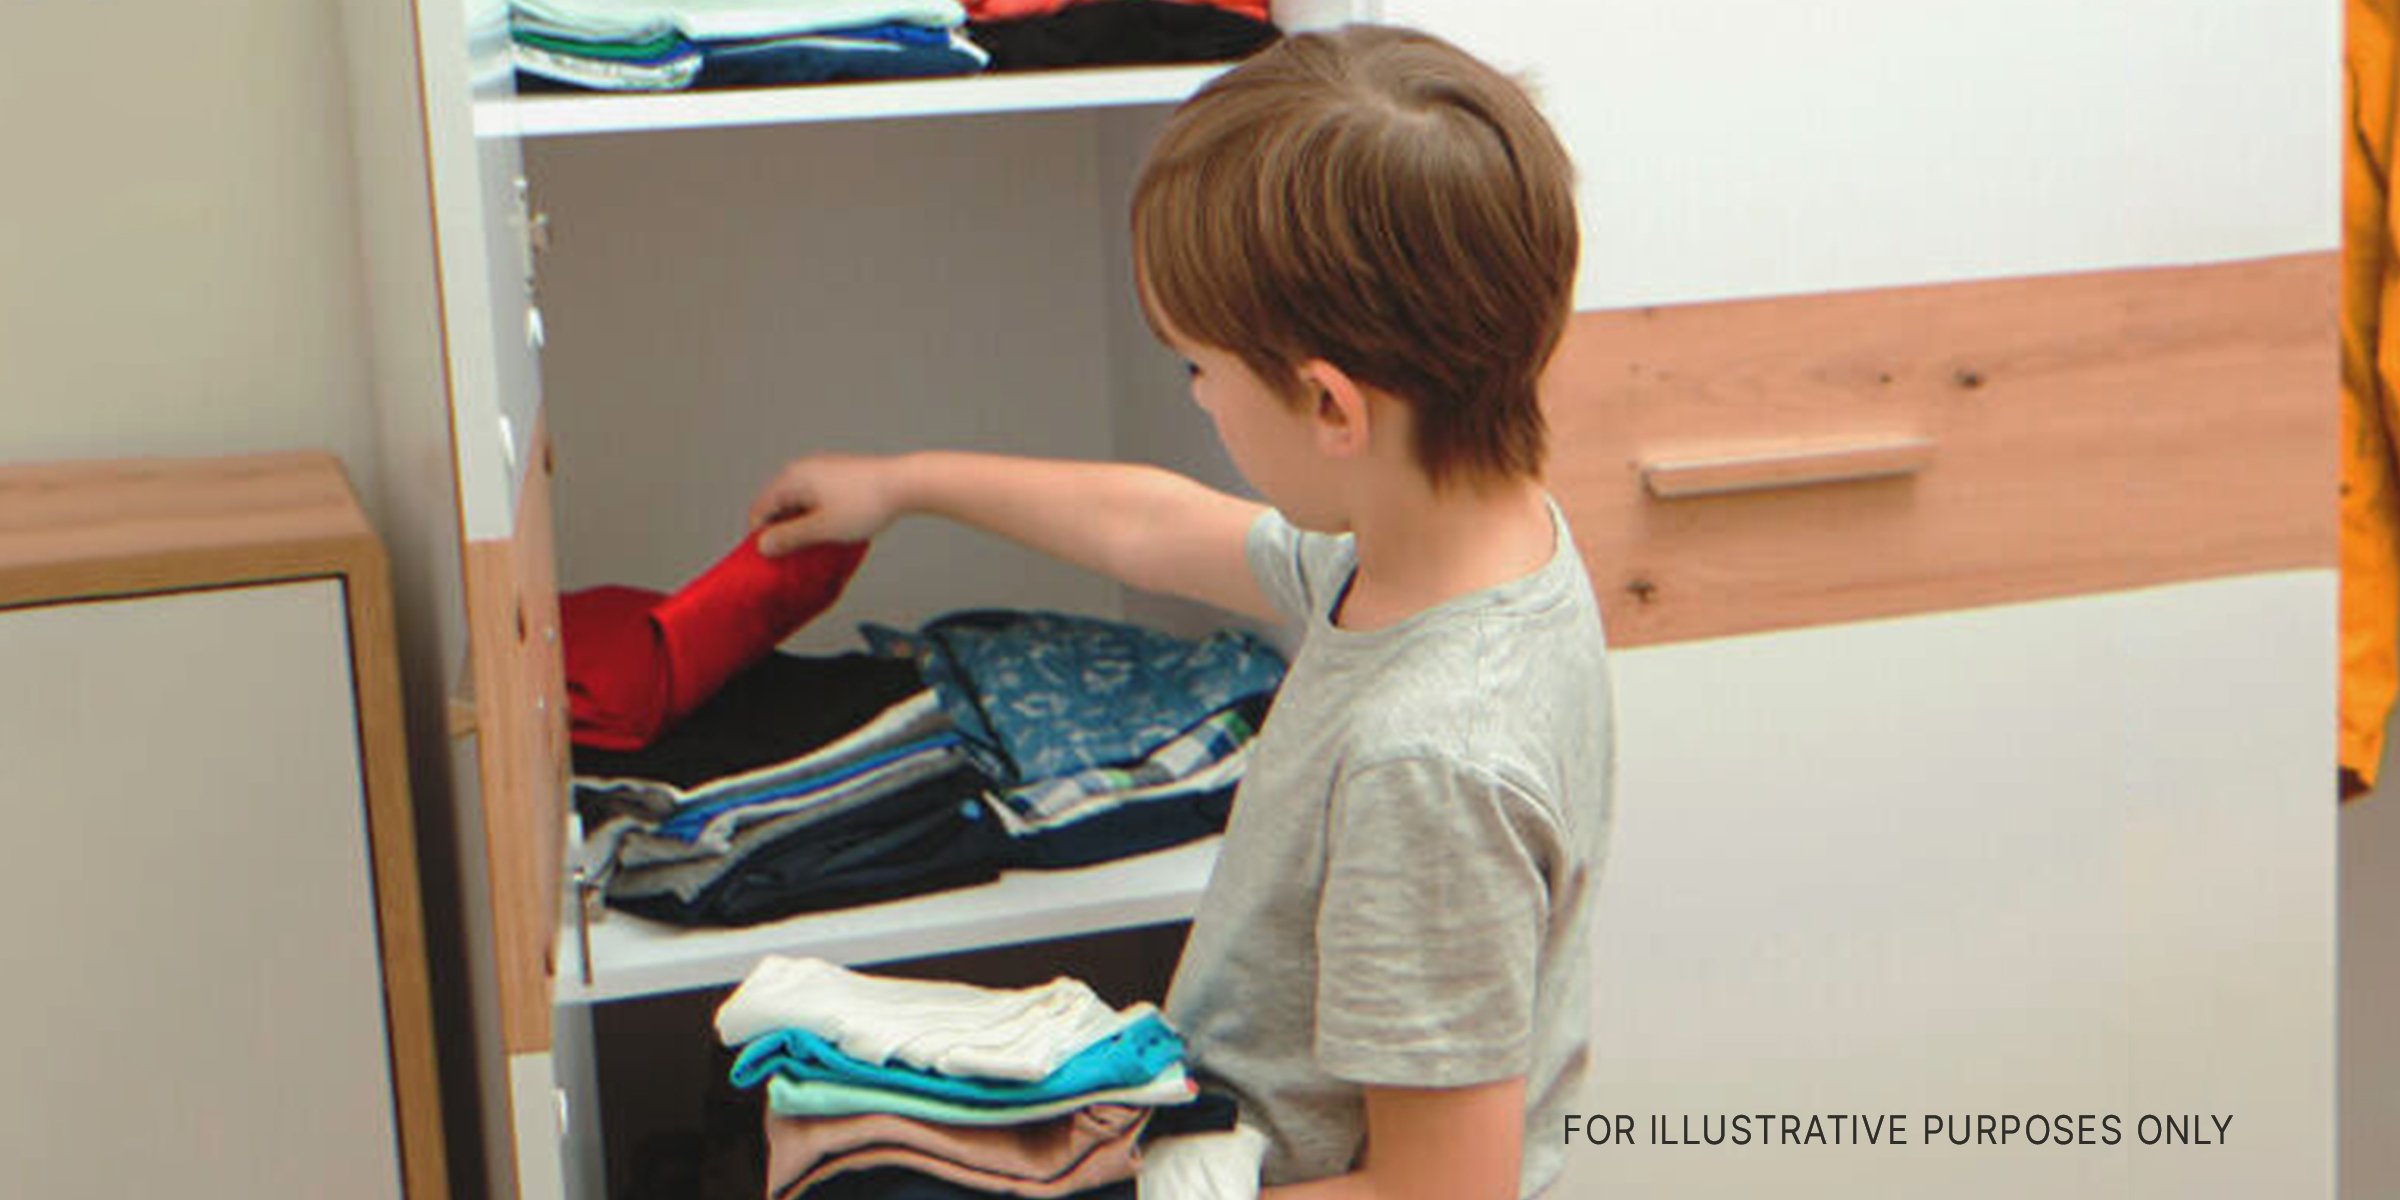 Boy looking in closet | Source: Shutterstock